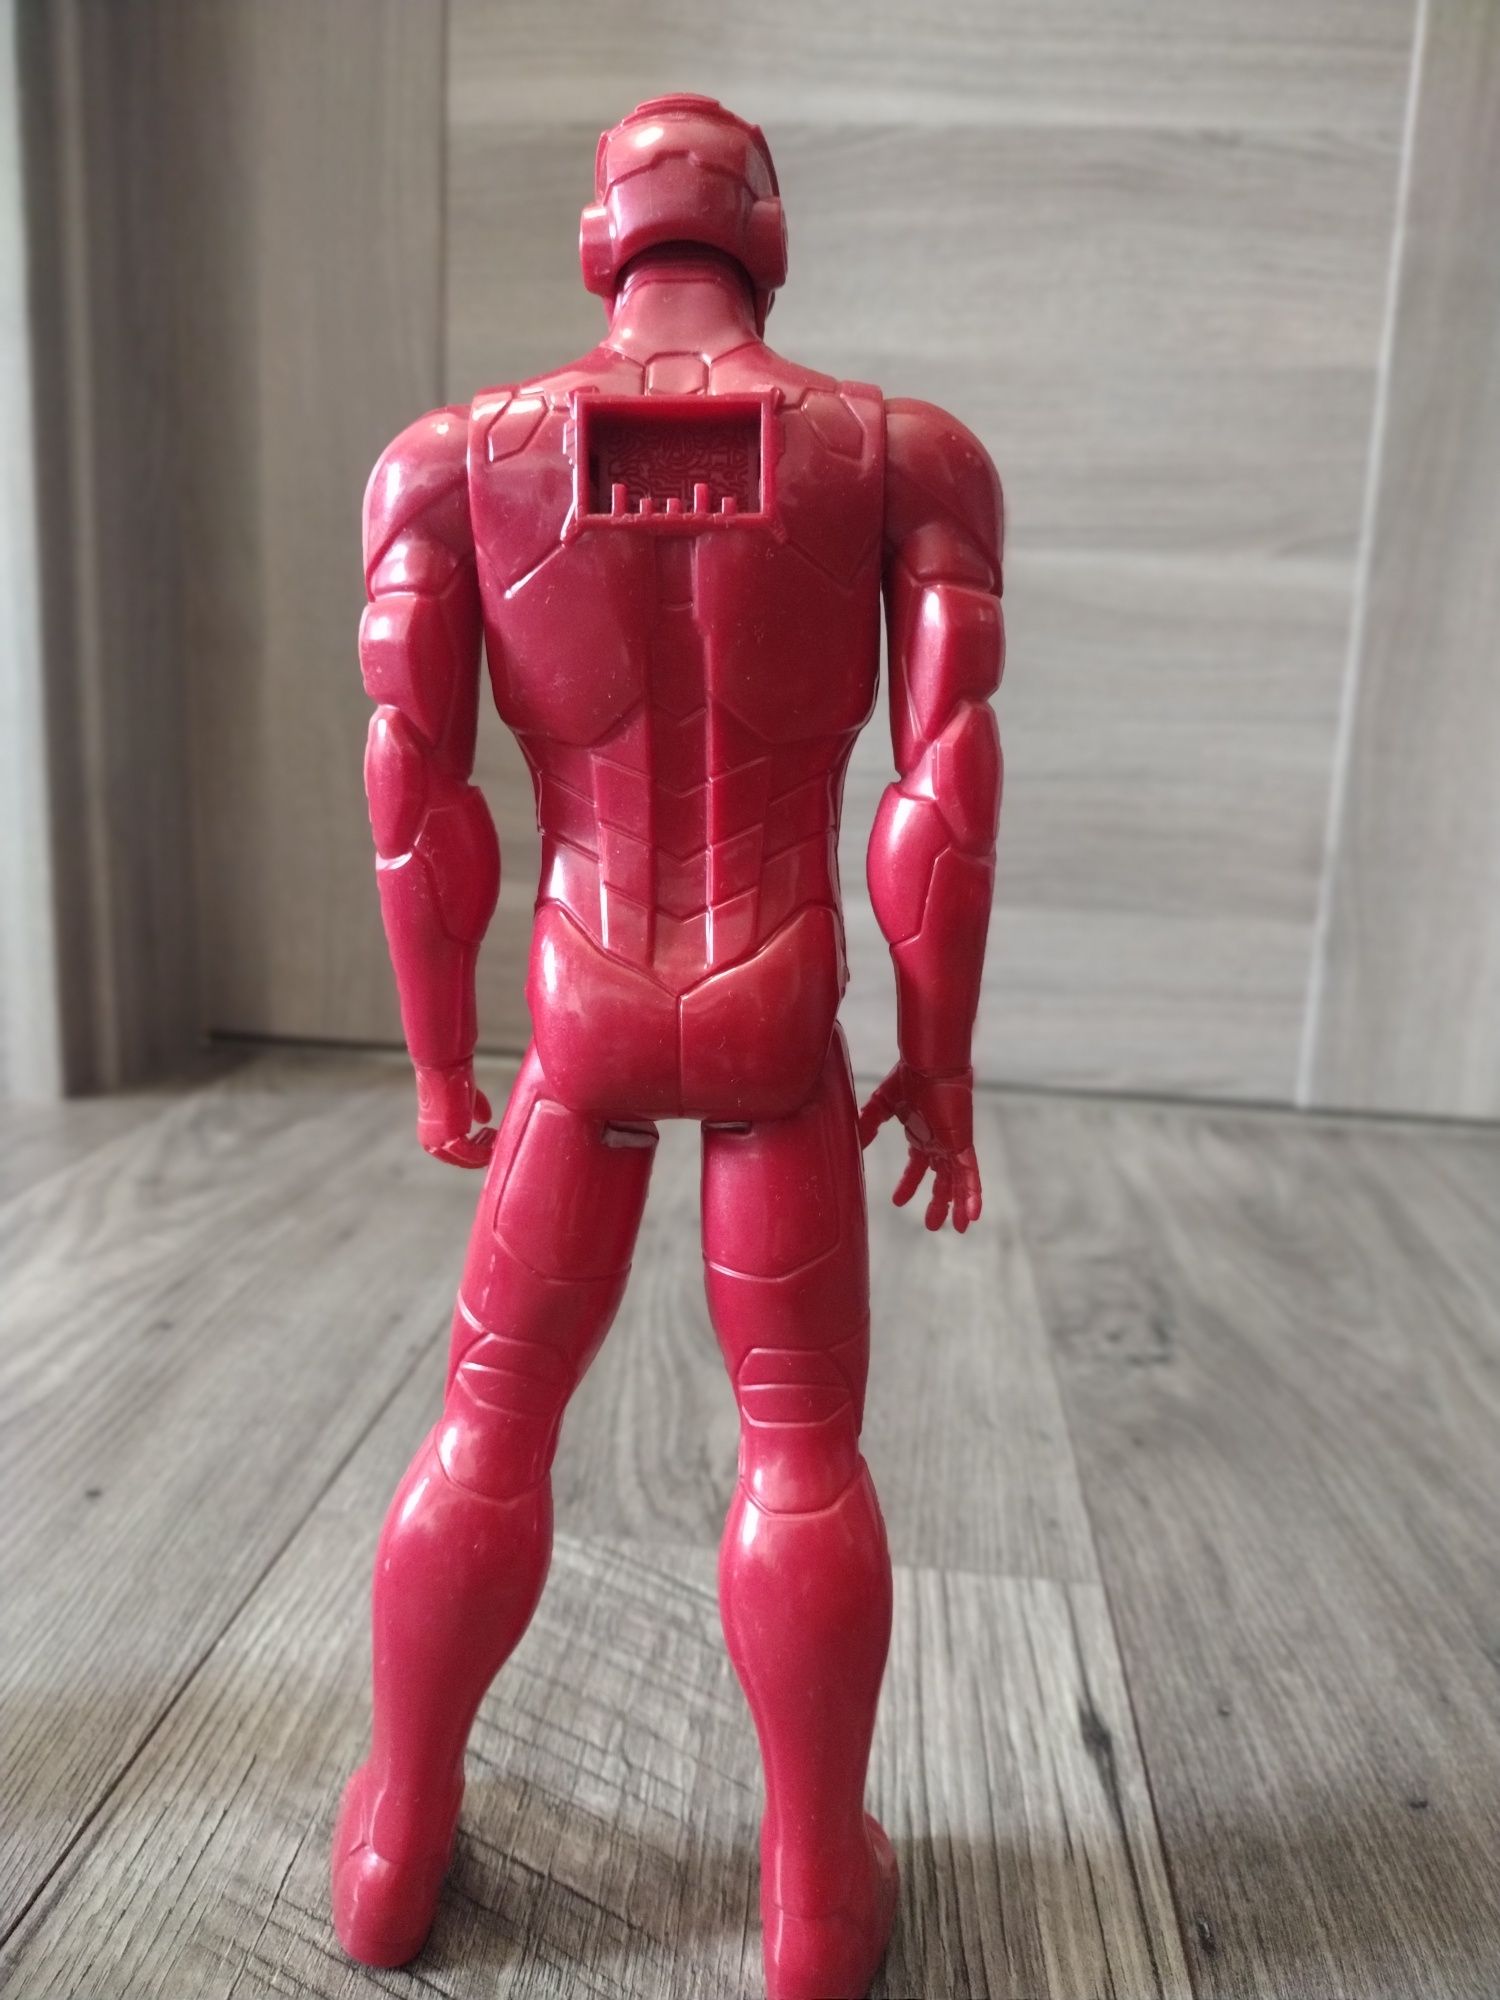 Figurka Iron Man z serii Marvel